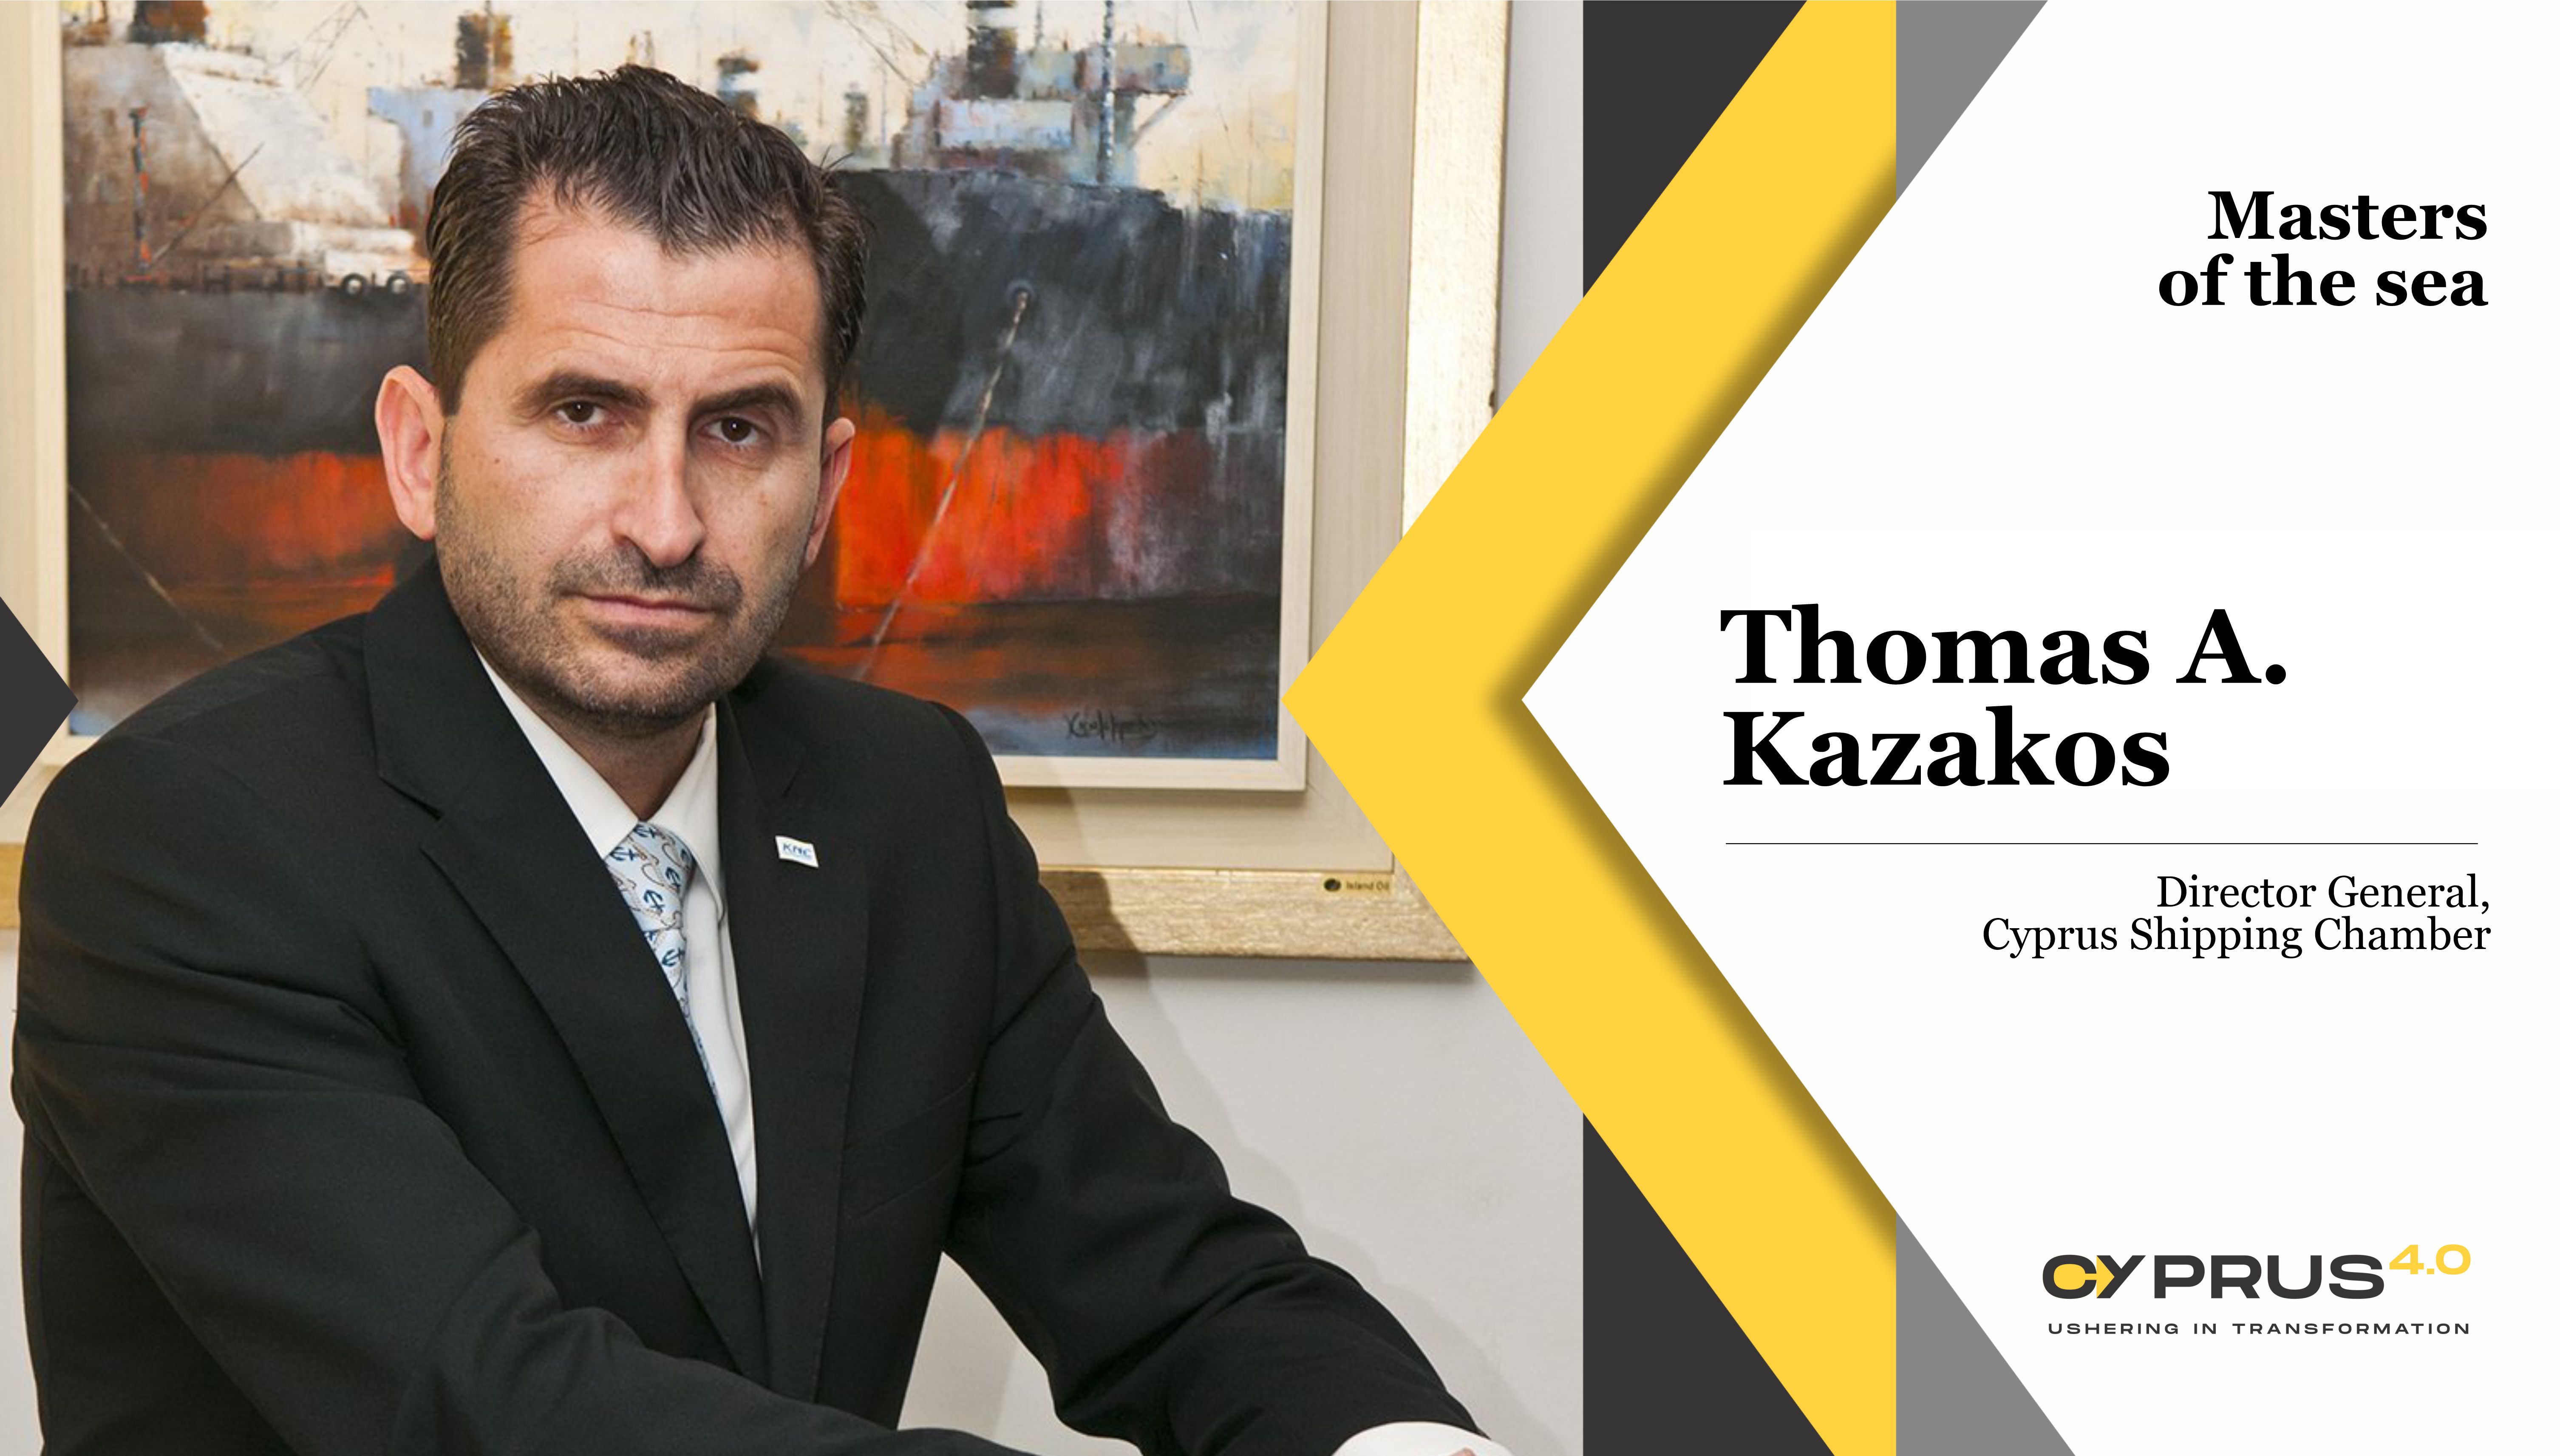 image Thomas A. Kazakos: Director General, Cyprus Shipping Chamber